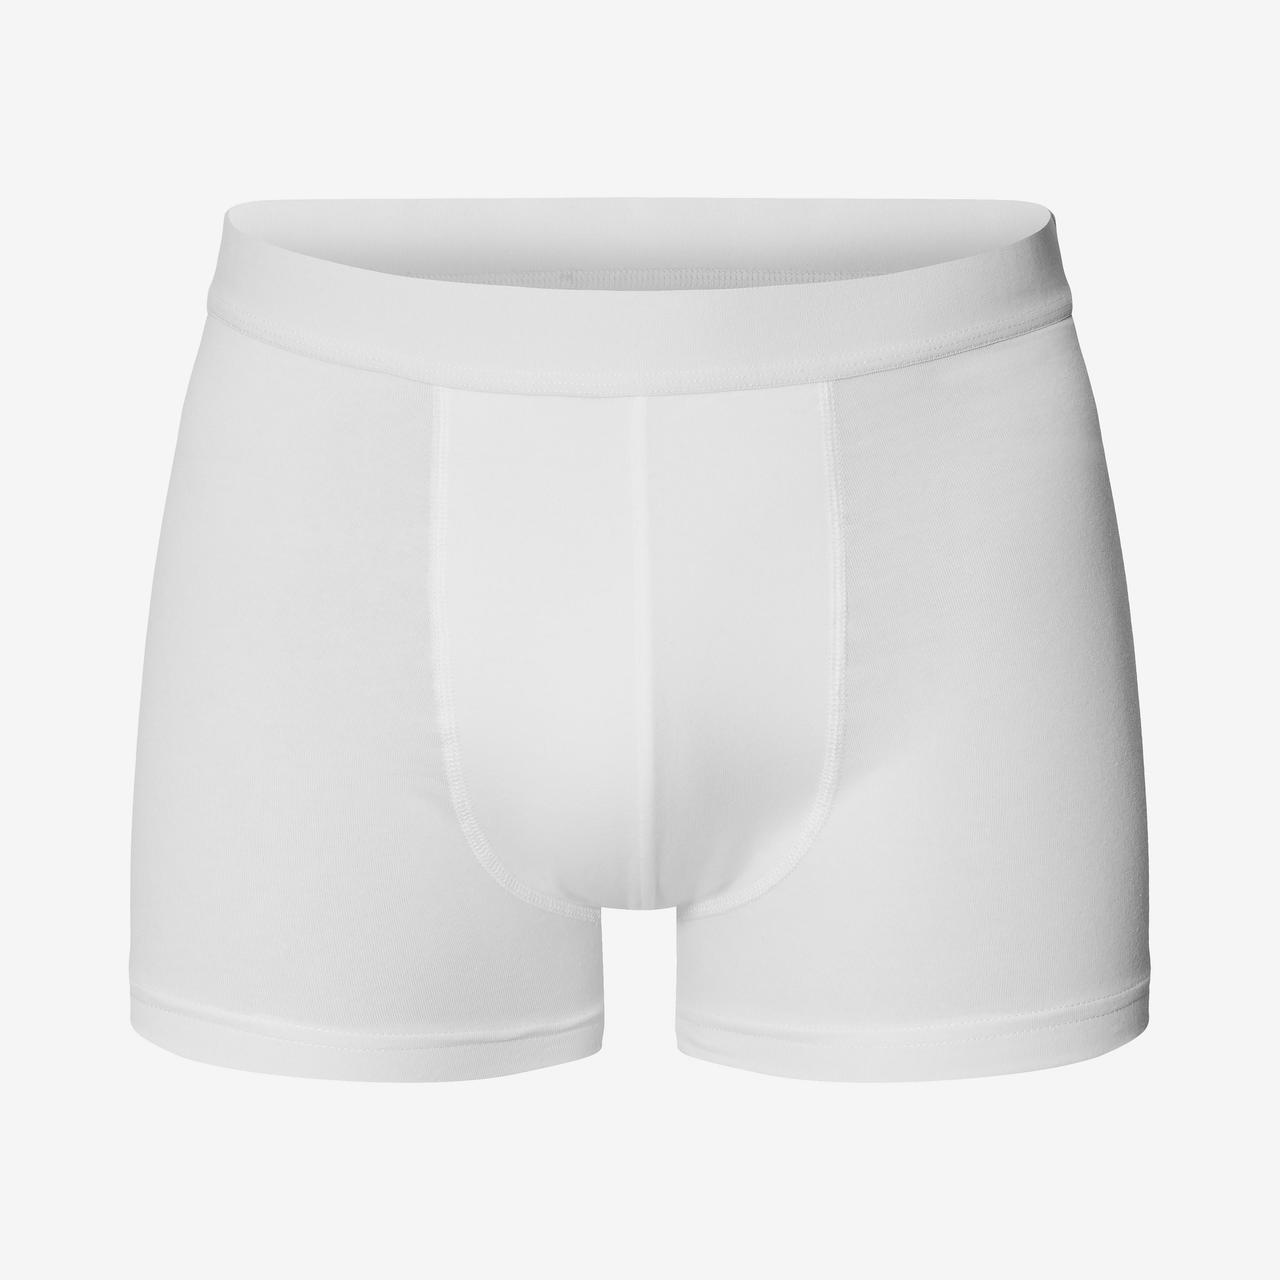 Men's Underwear. Find Boxers, Briefs & Boxer Briefs for Men in Unique Prices, Offers, Stock